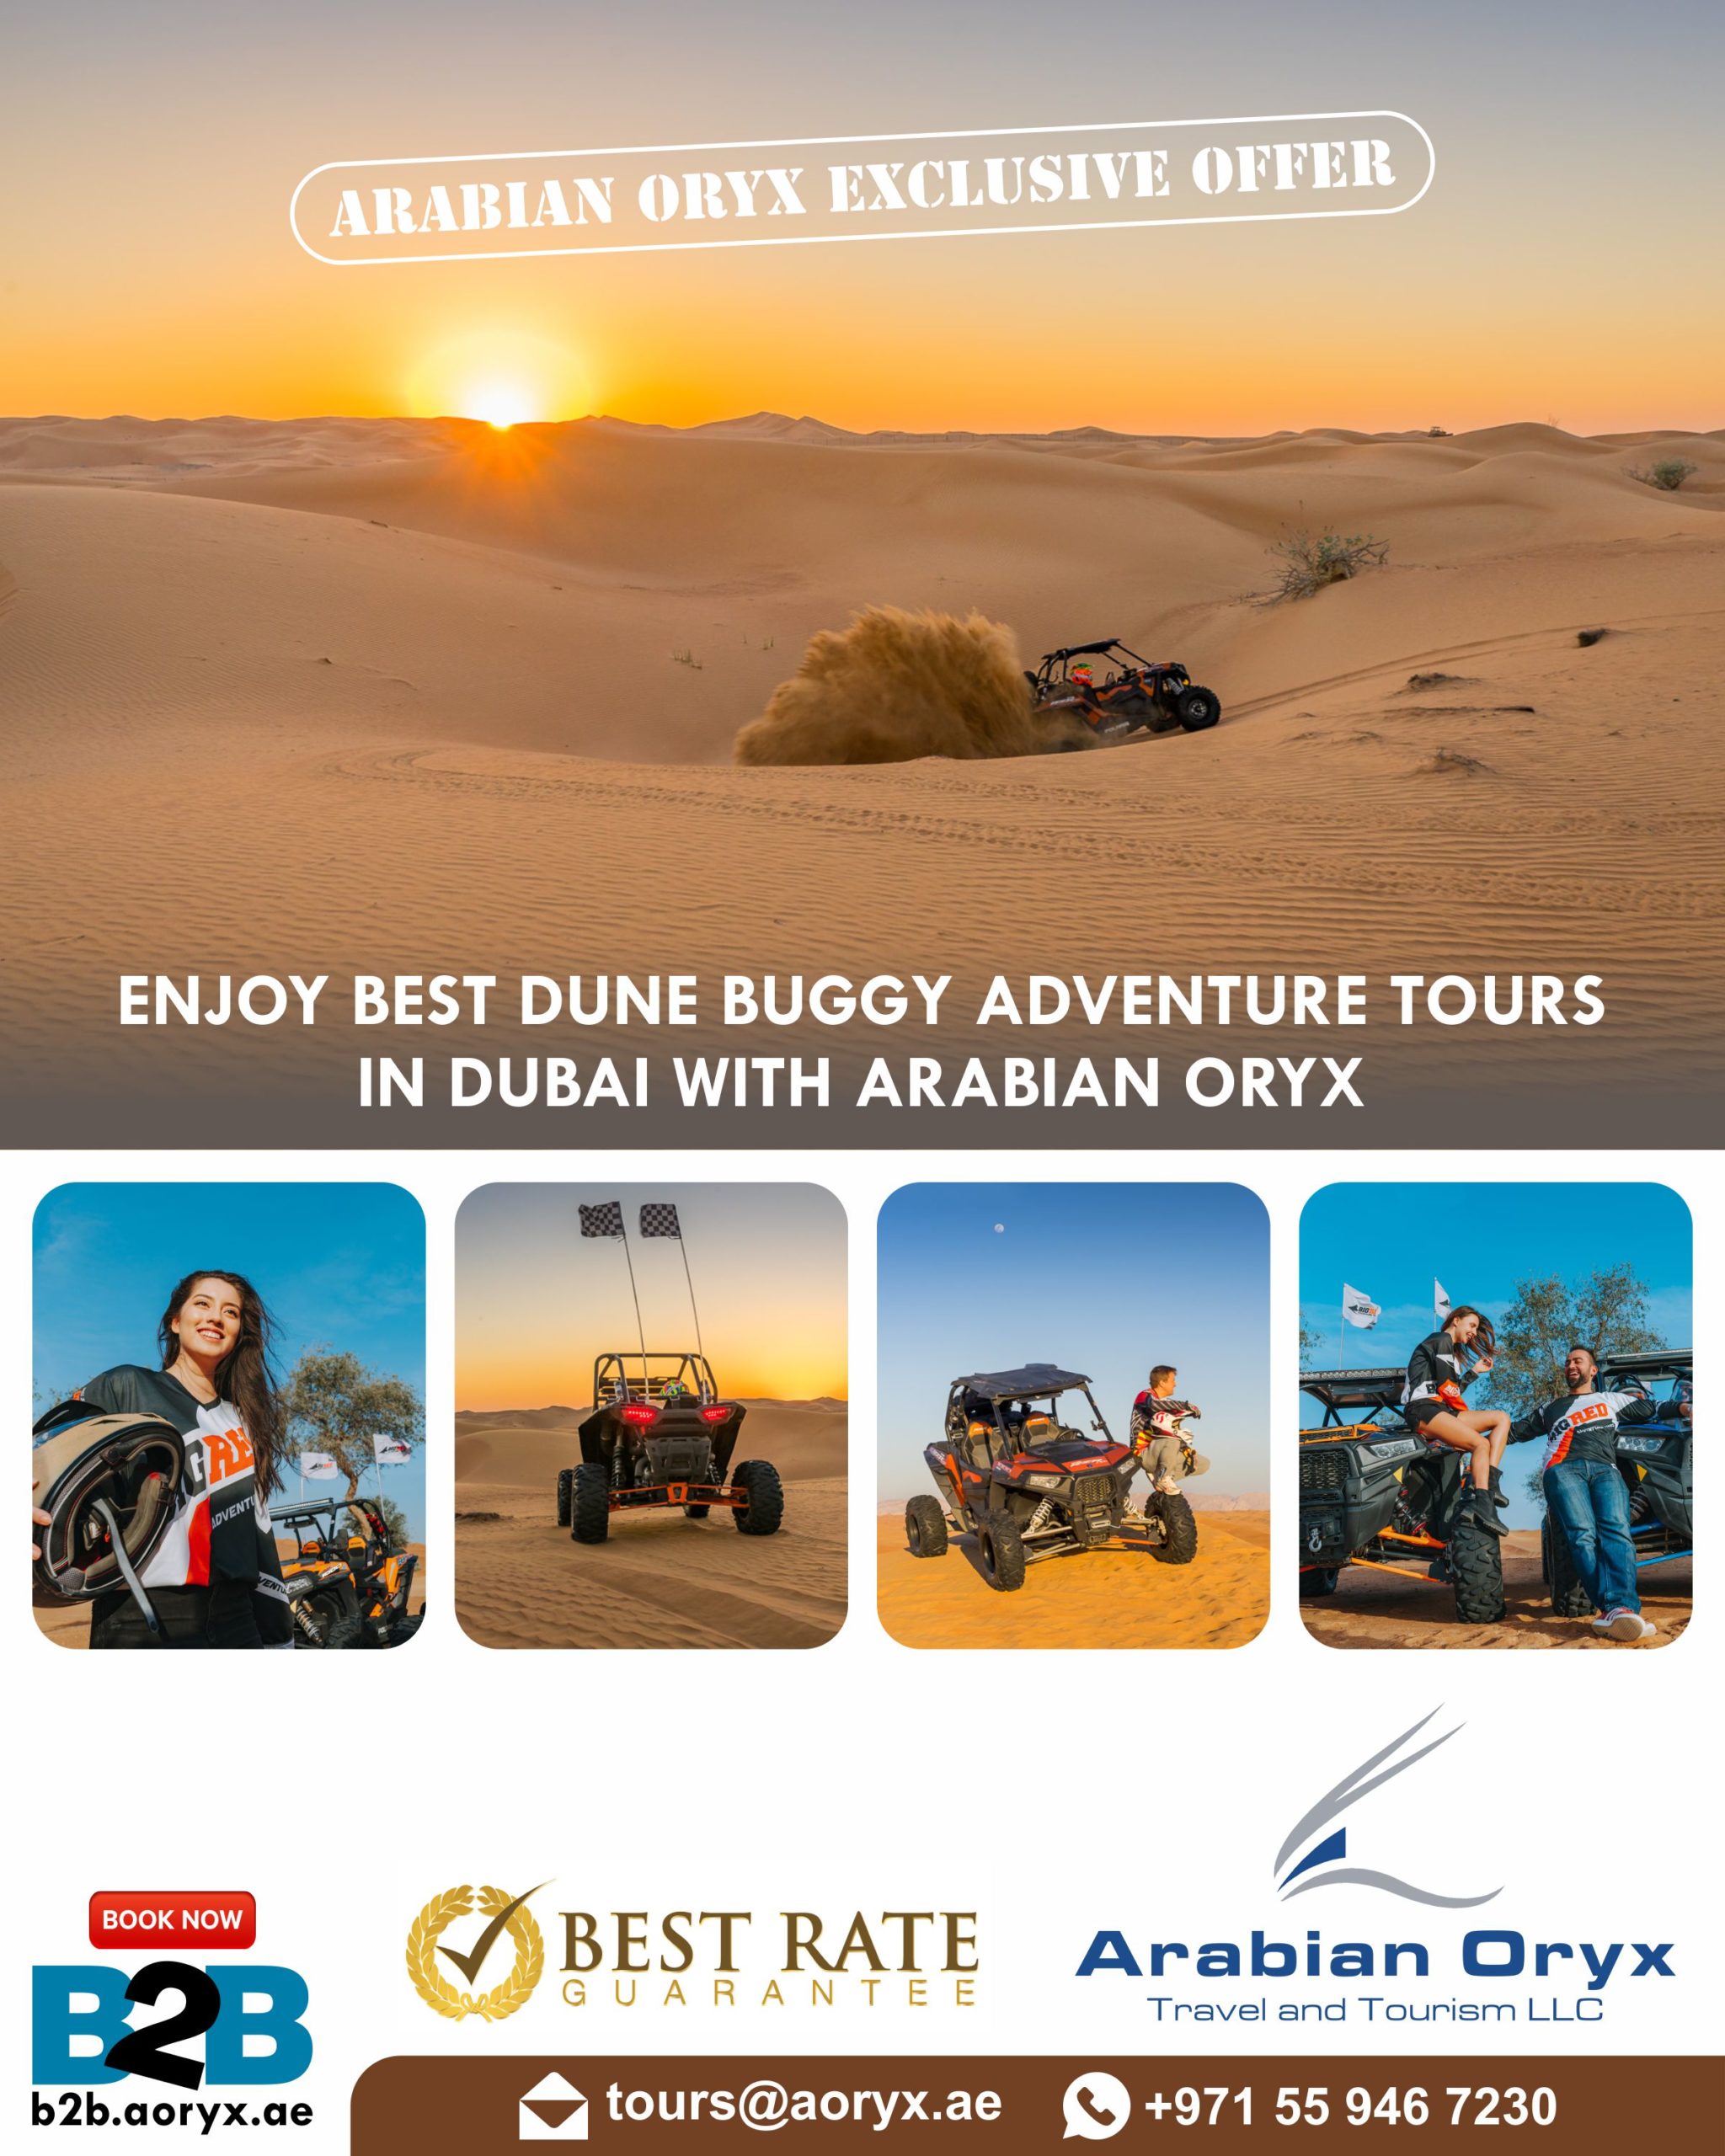 arabian oryx travel and tourism llc